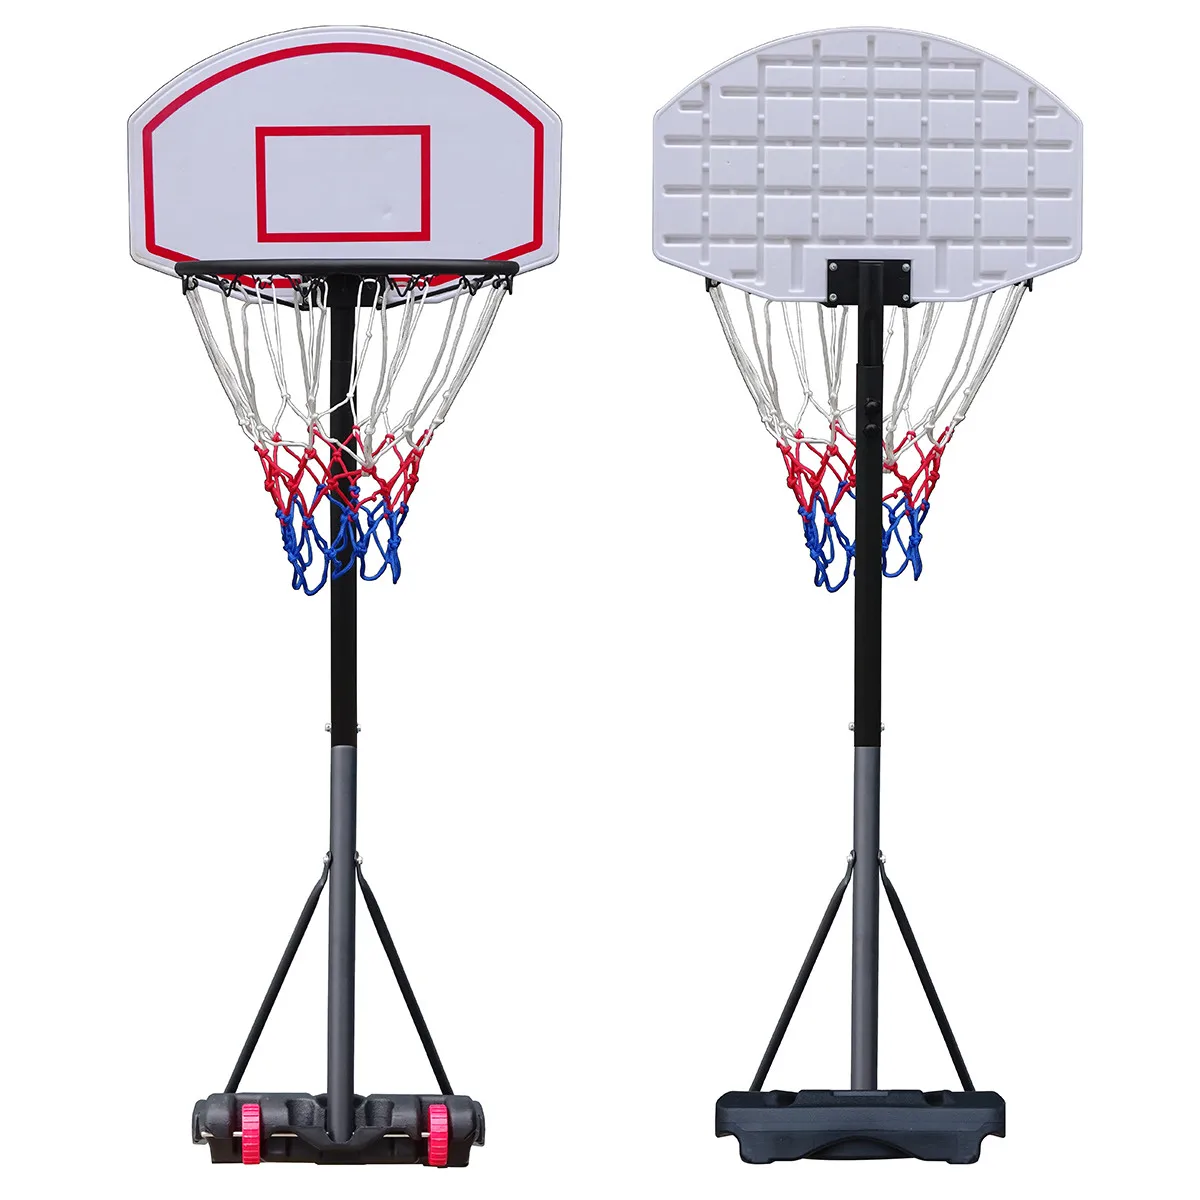 3M Adults Kids Indoor Mobile Basketball Stand Hoop Outdoor Sports Adjustable Shooting Rack Basket Rim Backboard Gear